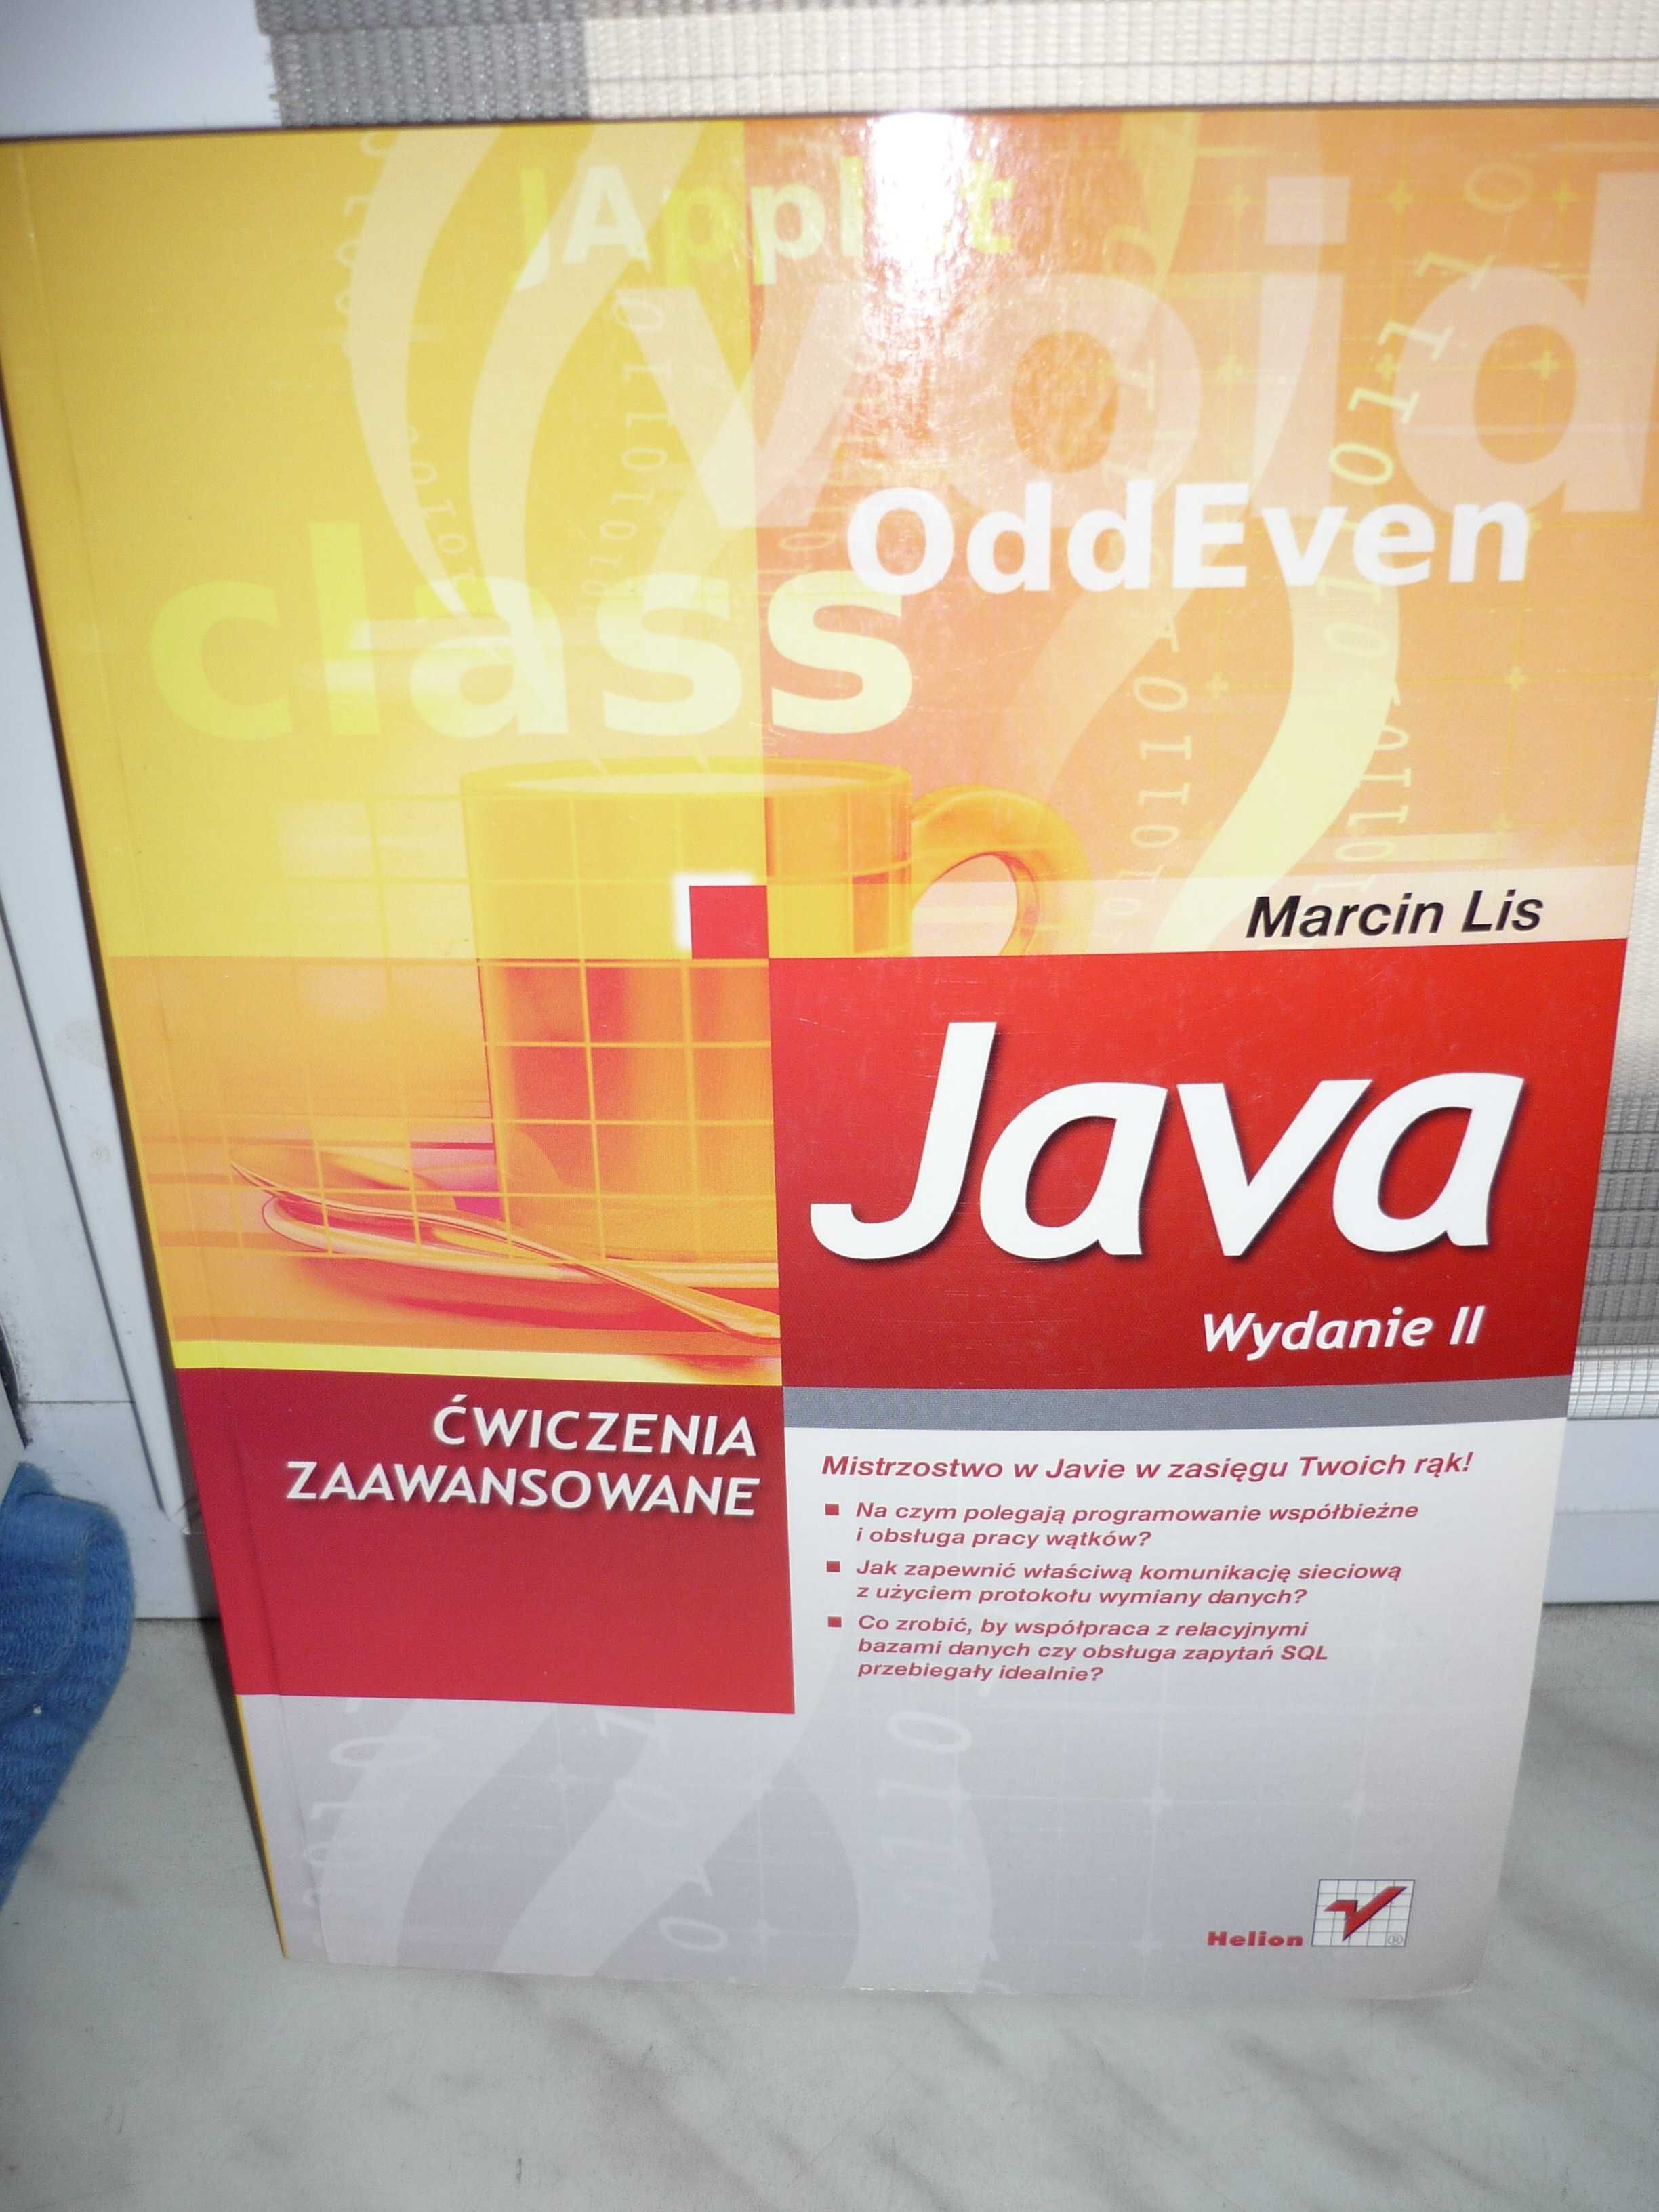 Java , ćwiczenia zaawansowane , Marcin Lis.